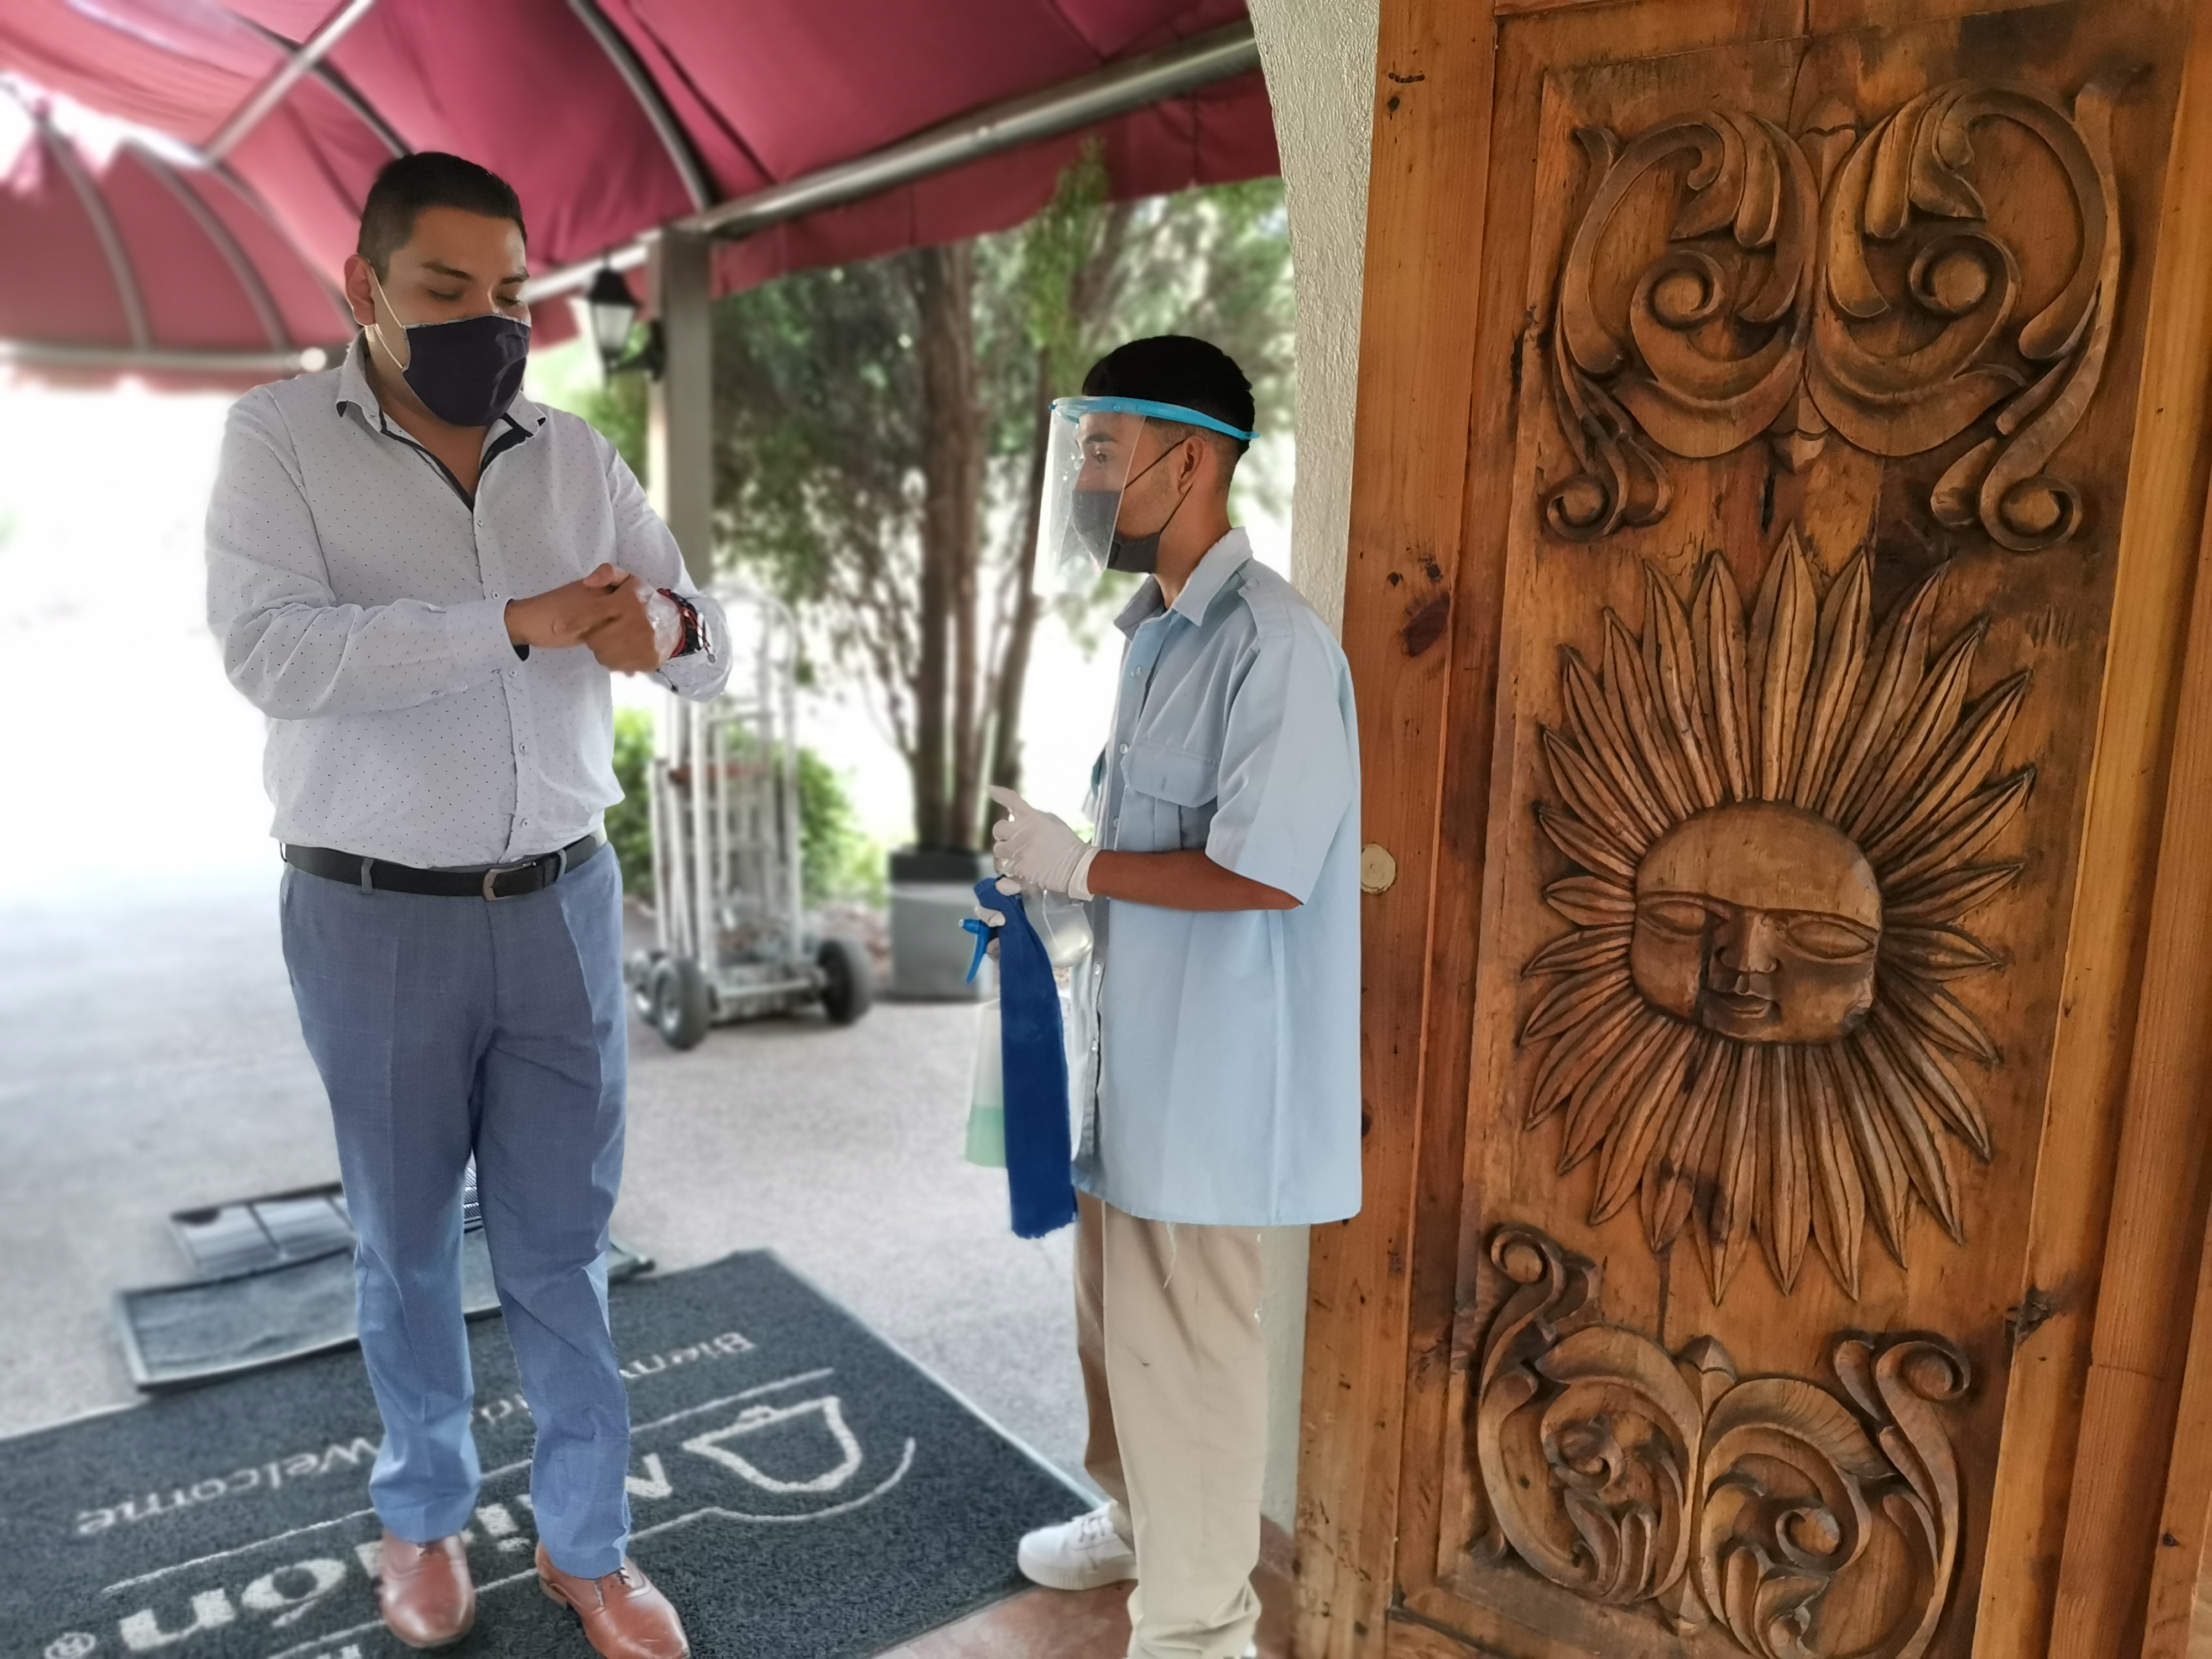 Informan horarios de atención de sitios turísticos en Silao